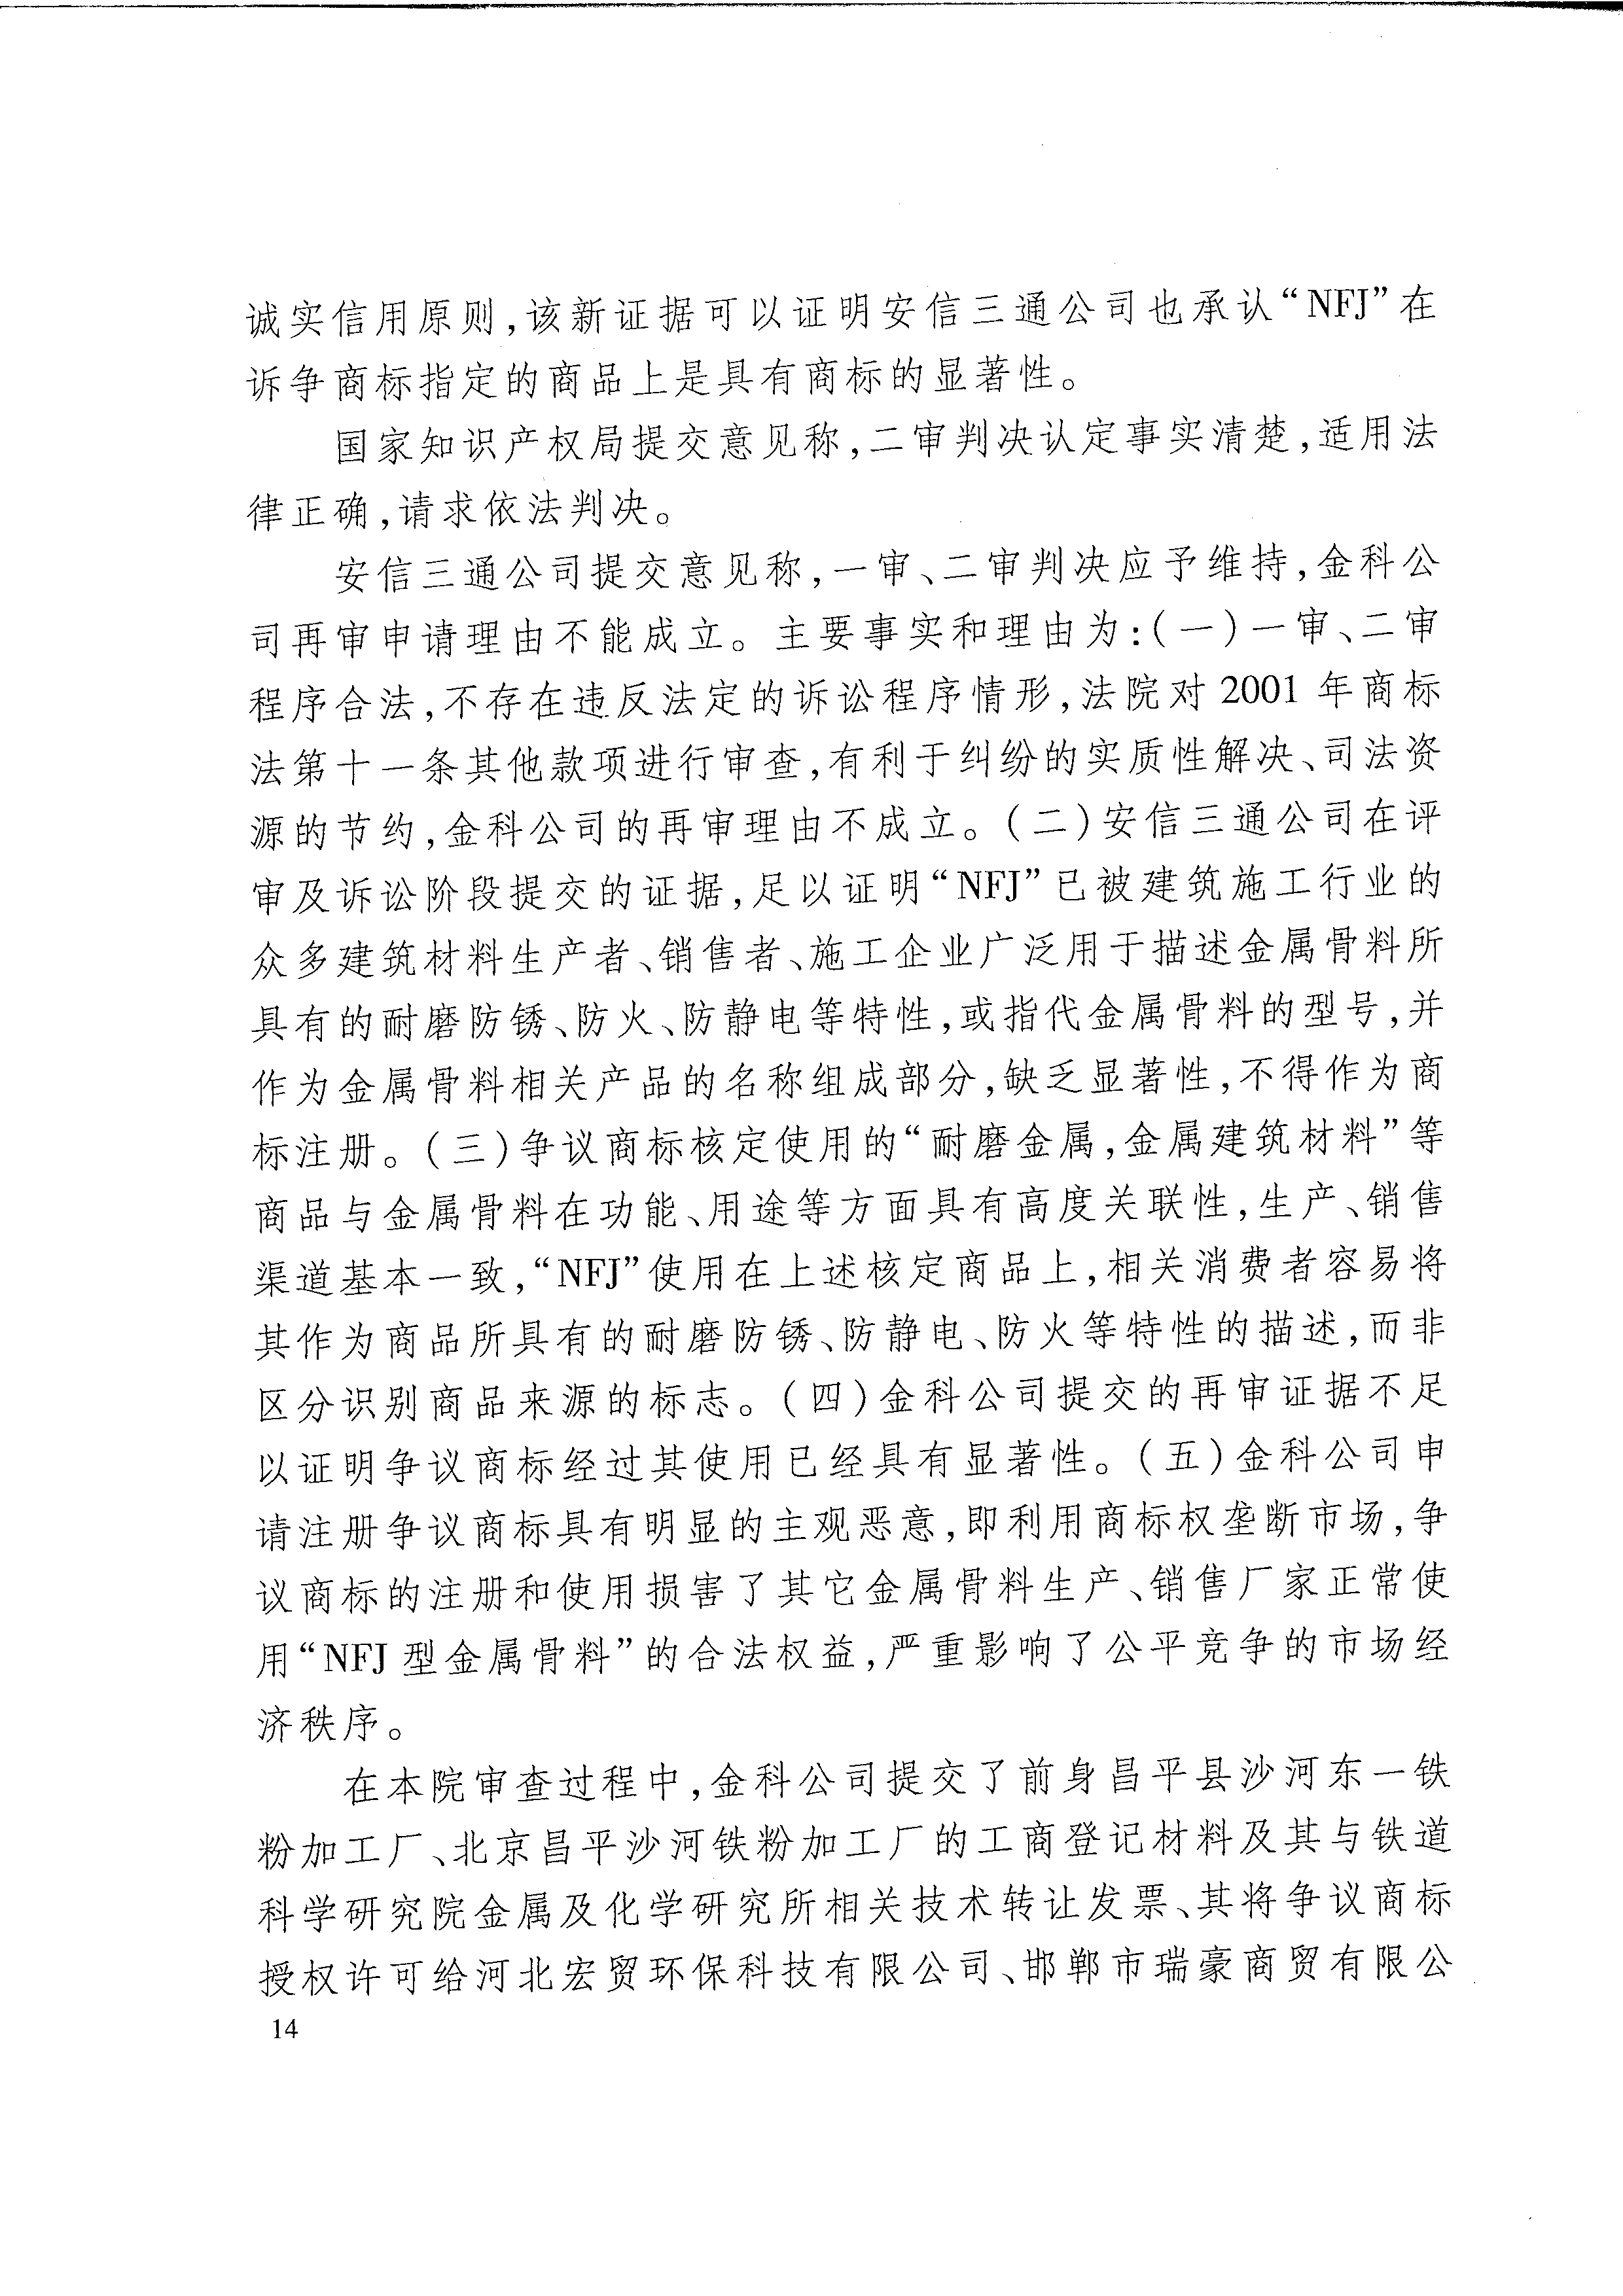 再审行政判决书(1)_Page_14.png